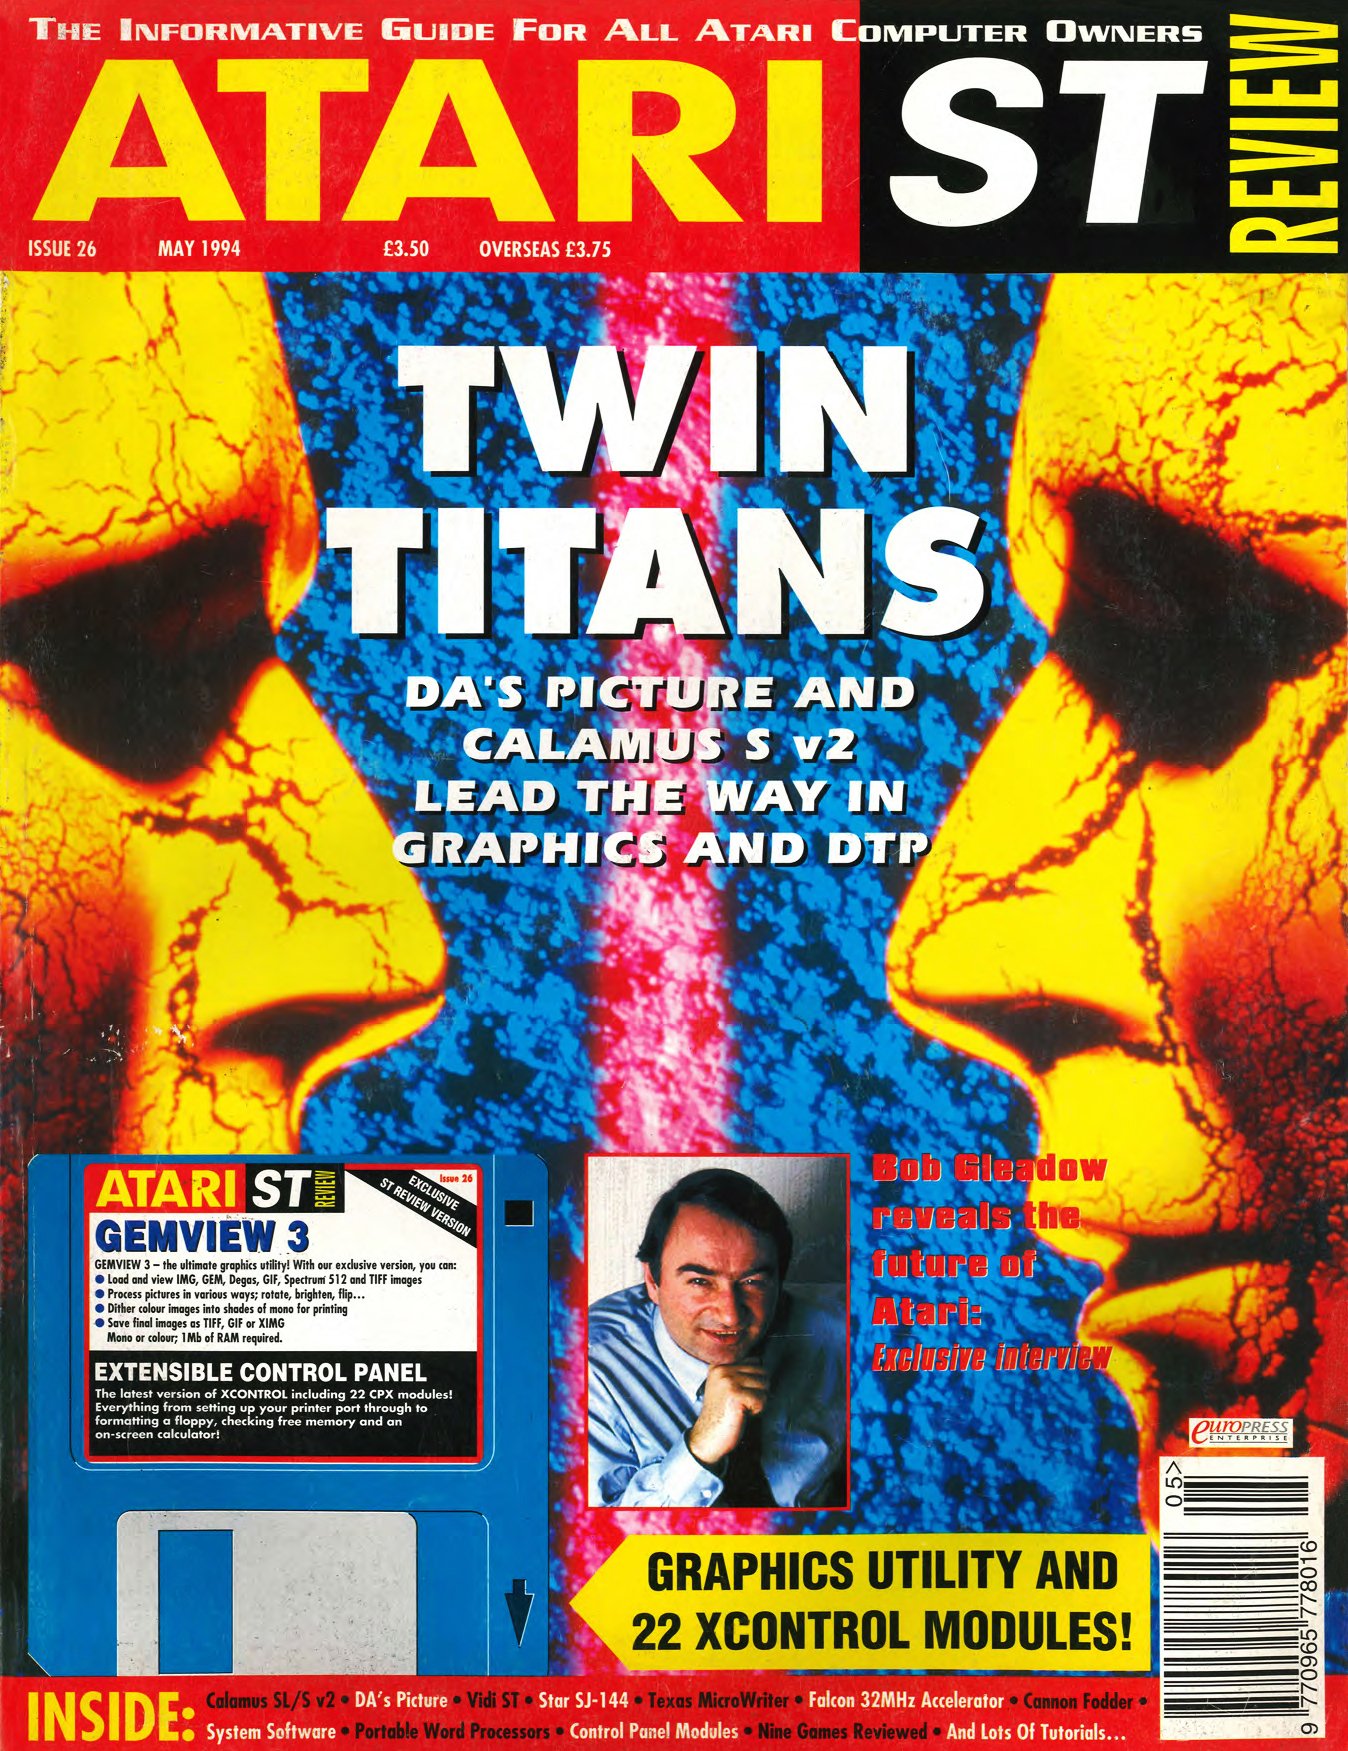 Atari ST Review Issue 26 (May 1994)